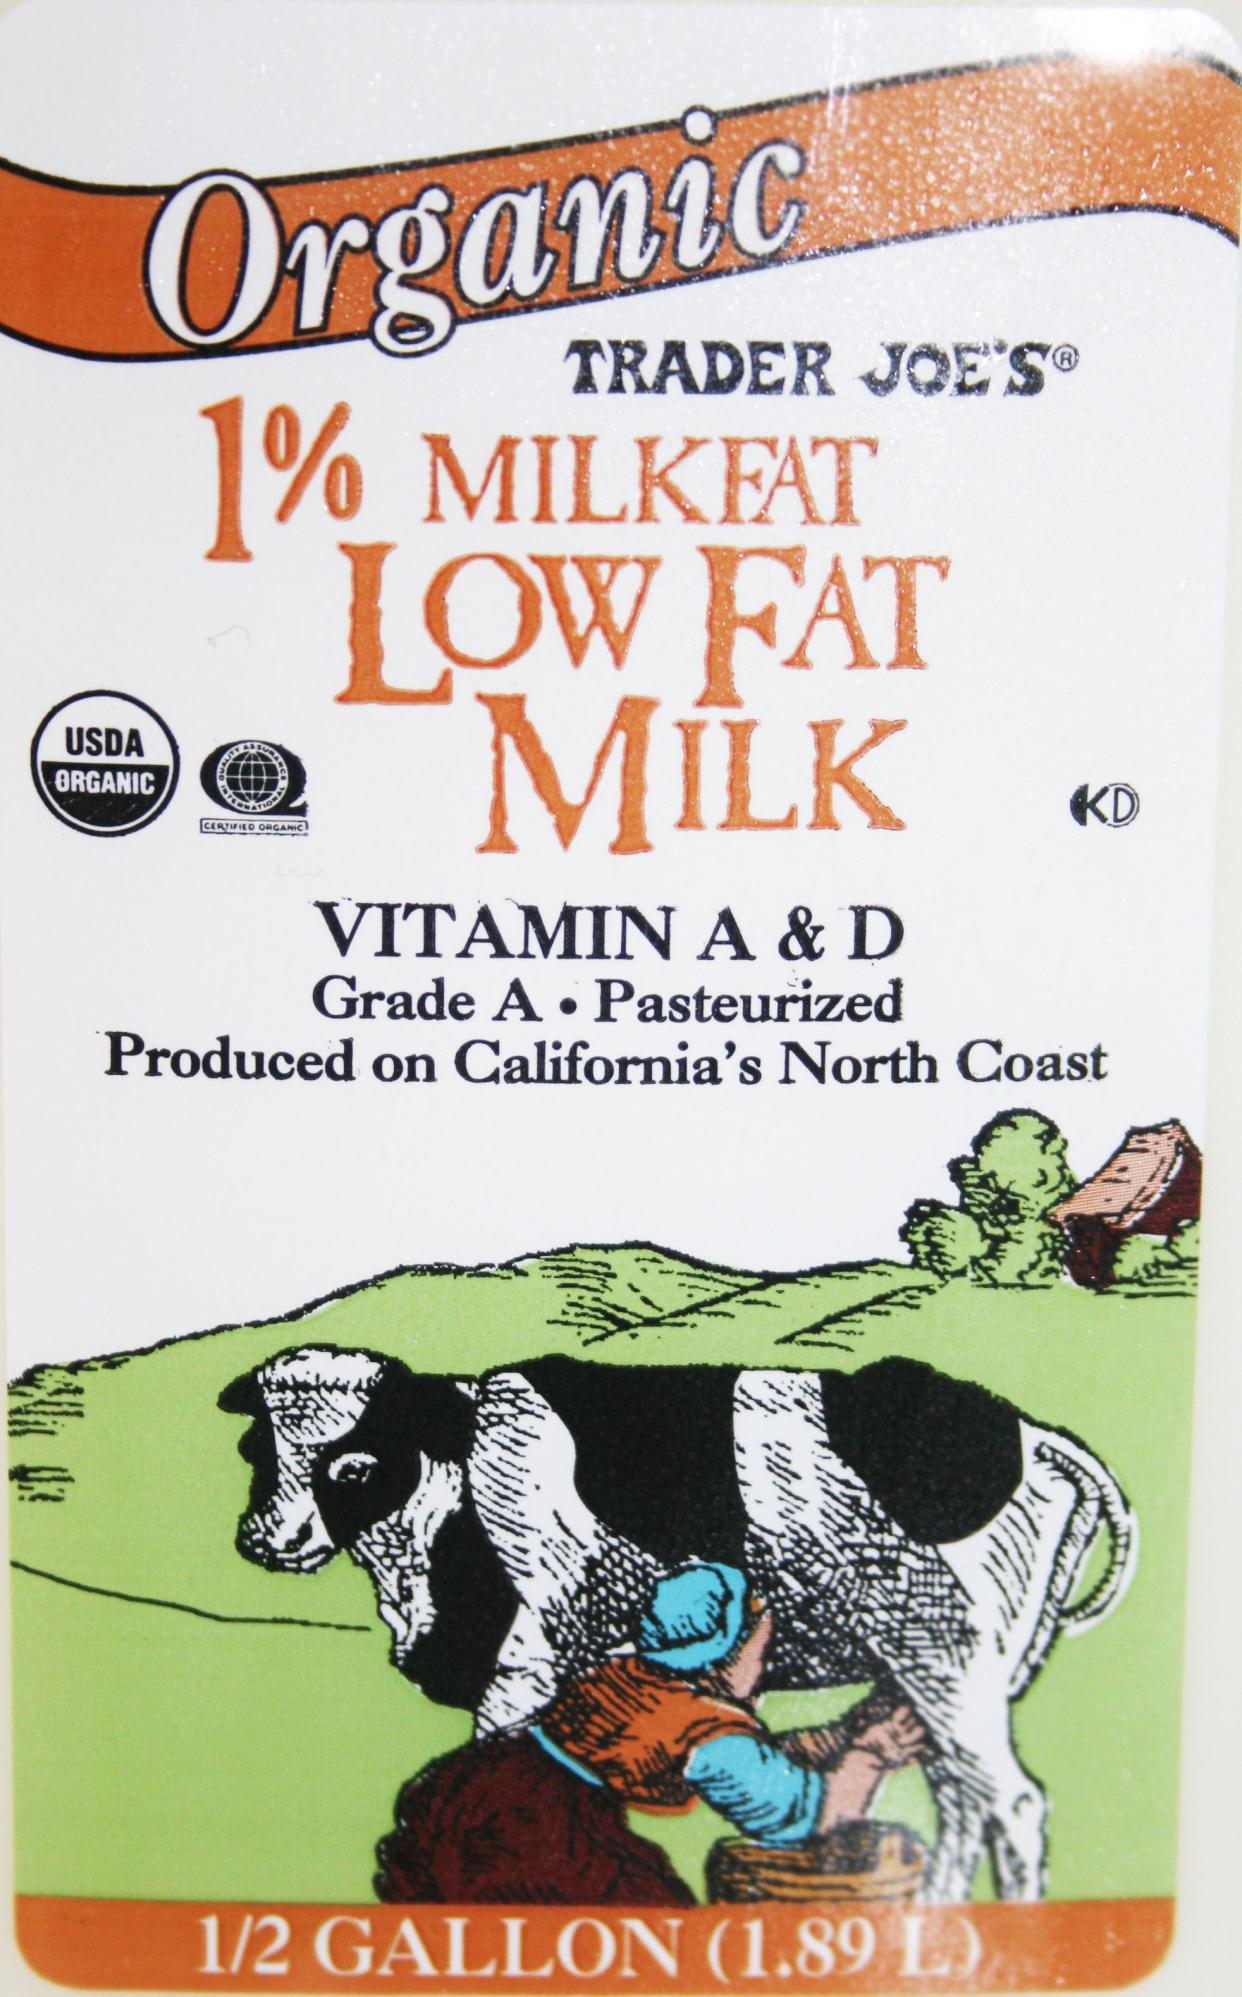 Label for Trader Joe's low-fat milk